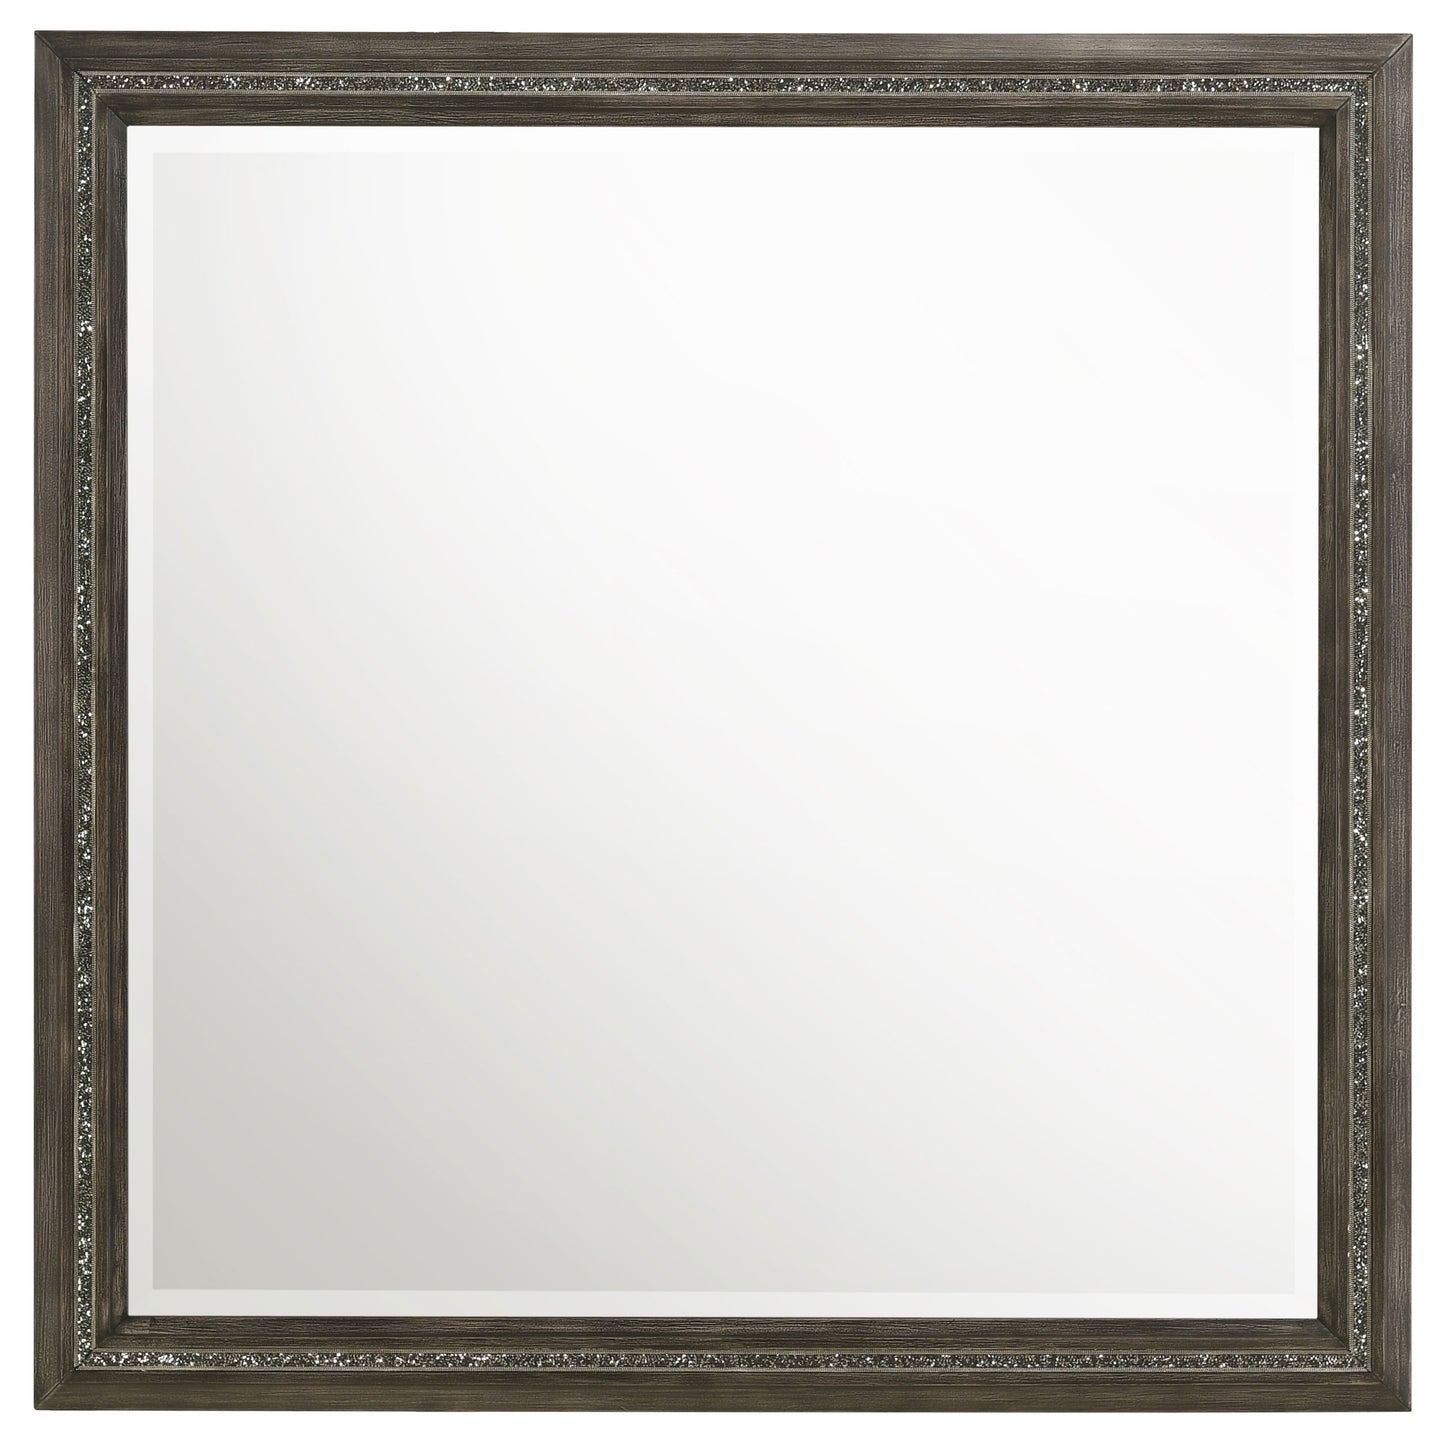 Janine Square Dresser Mirror Grey